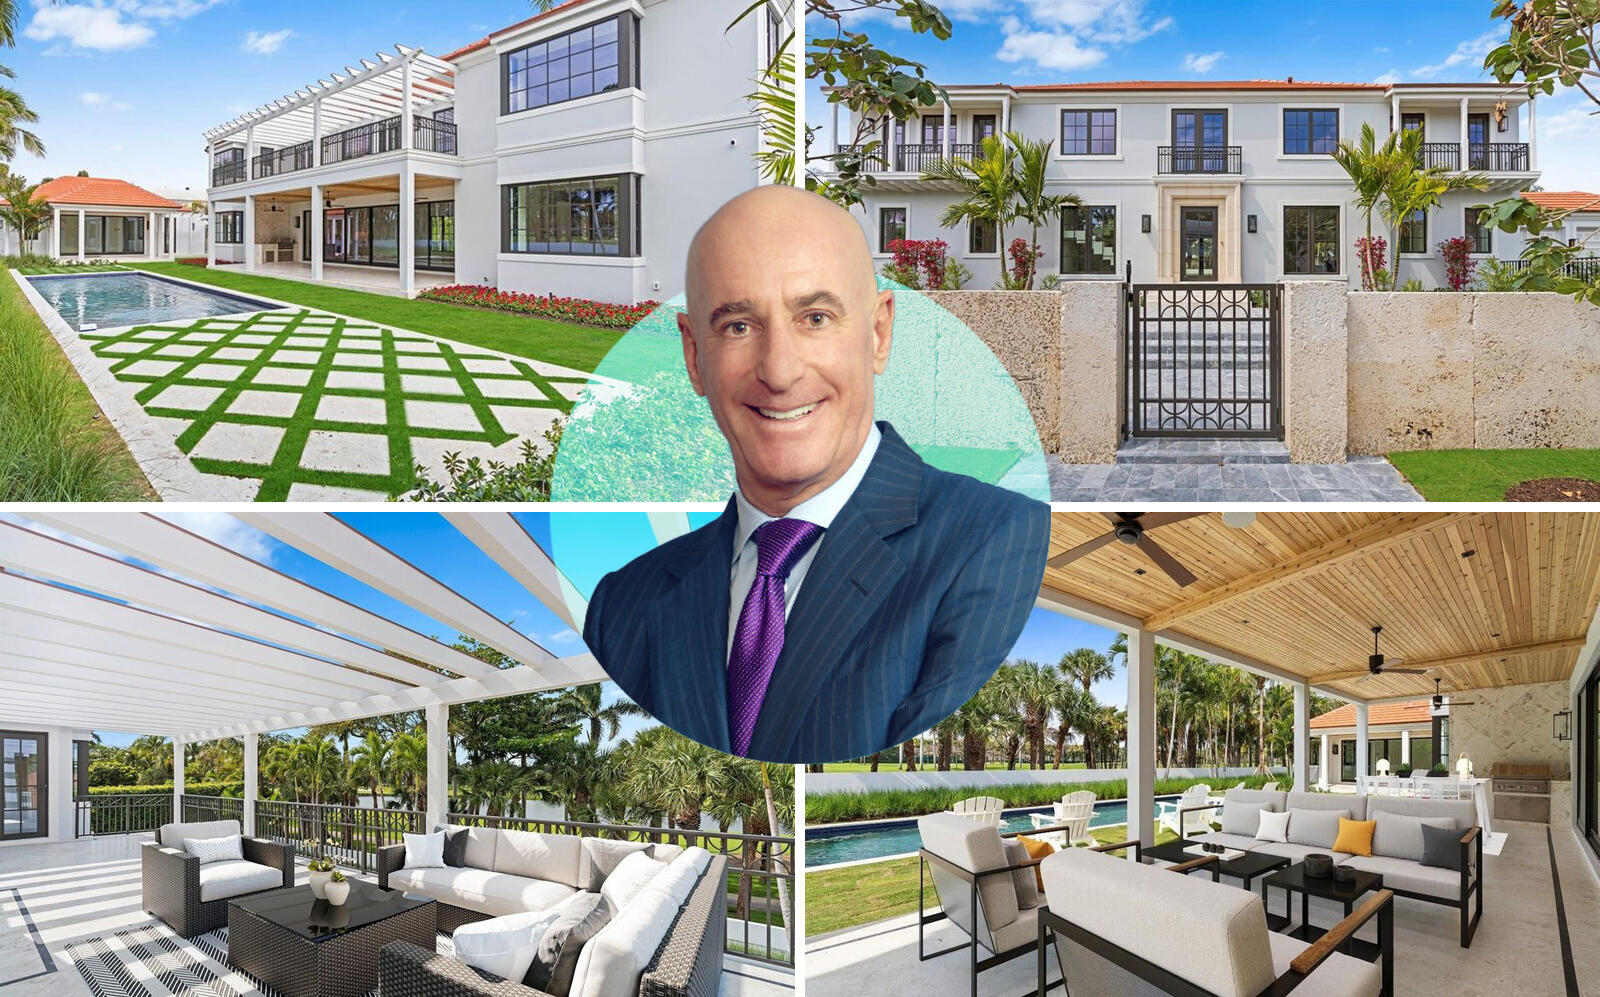 Thomas Iovino and the Palm Beach property (Iovino via LinkedIn, Brown Harris Stevens via Realtor)